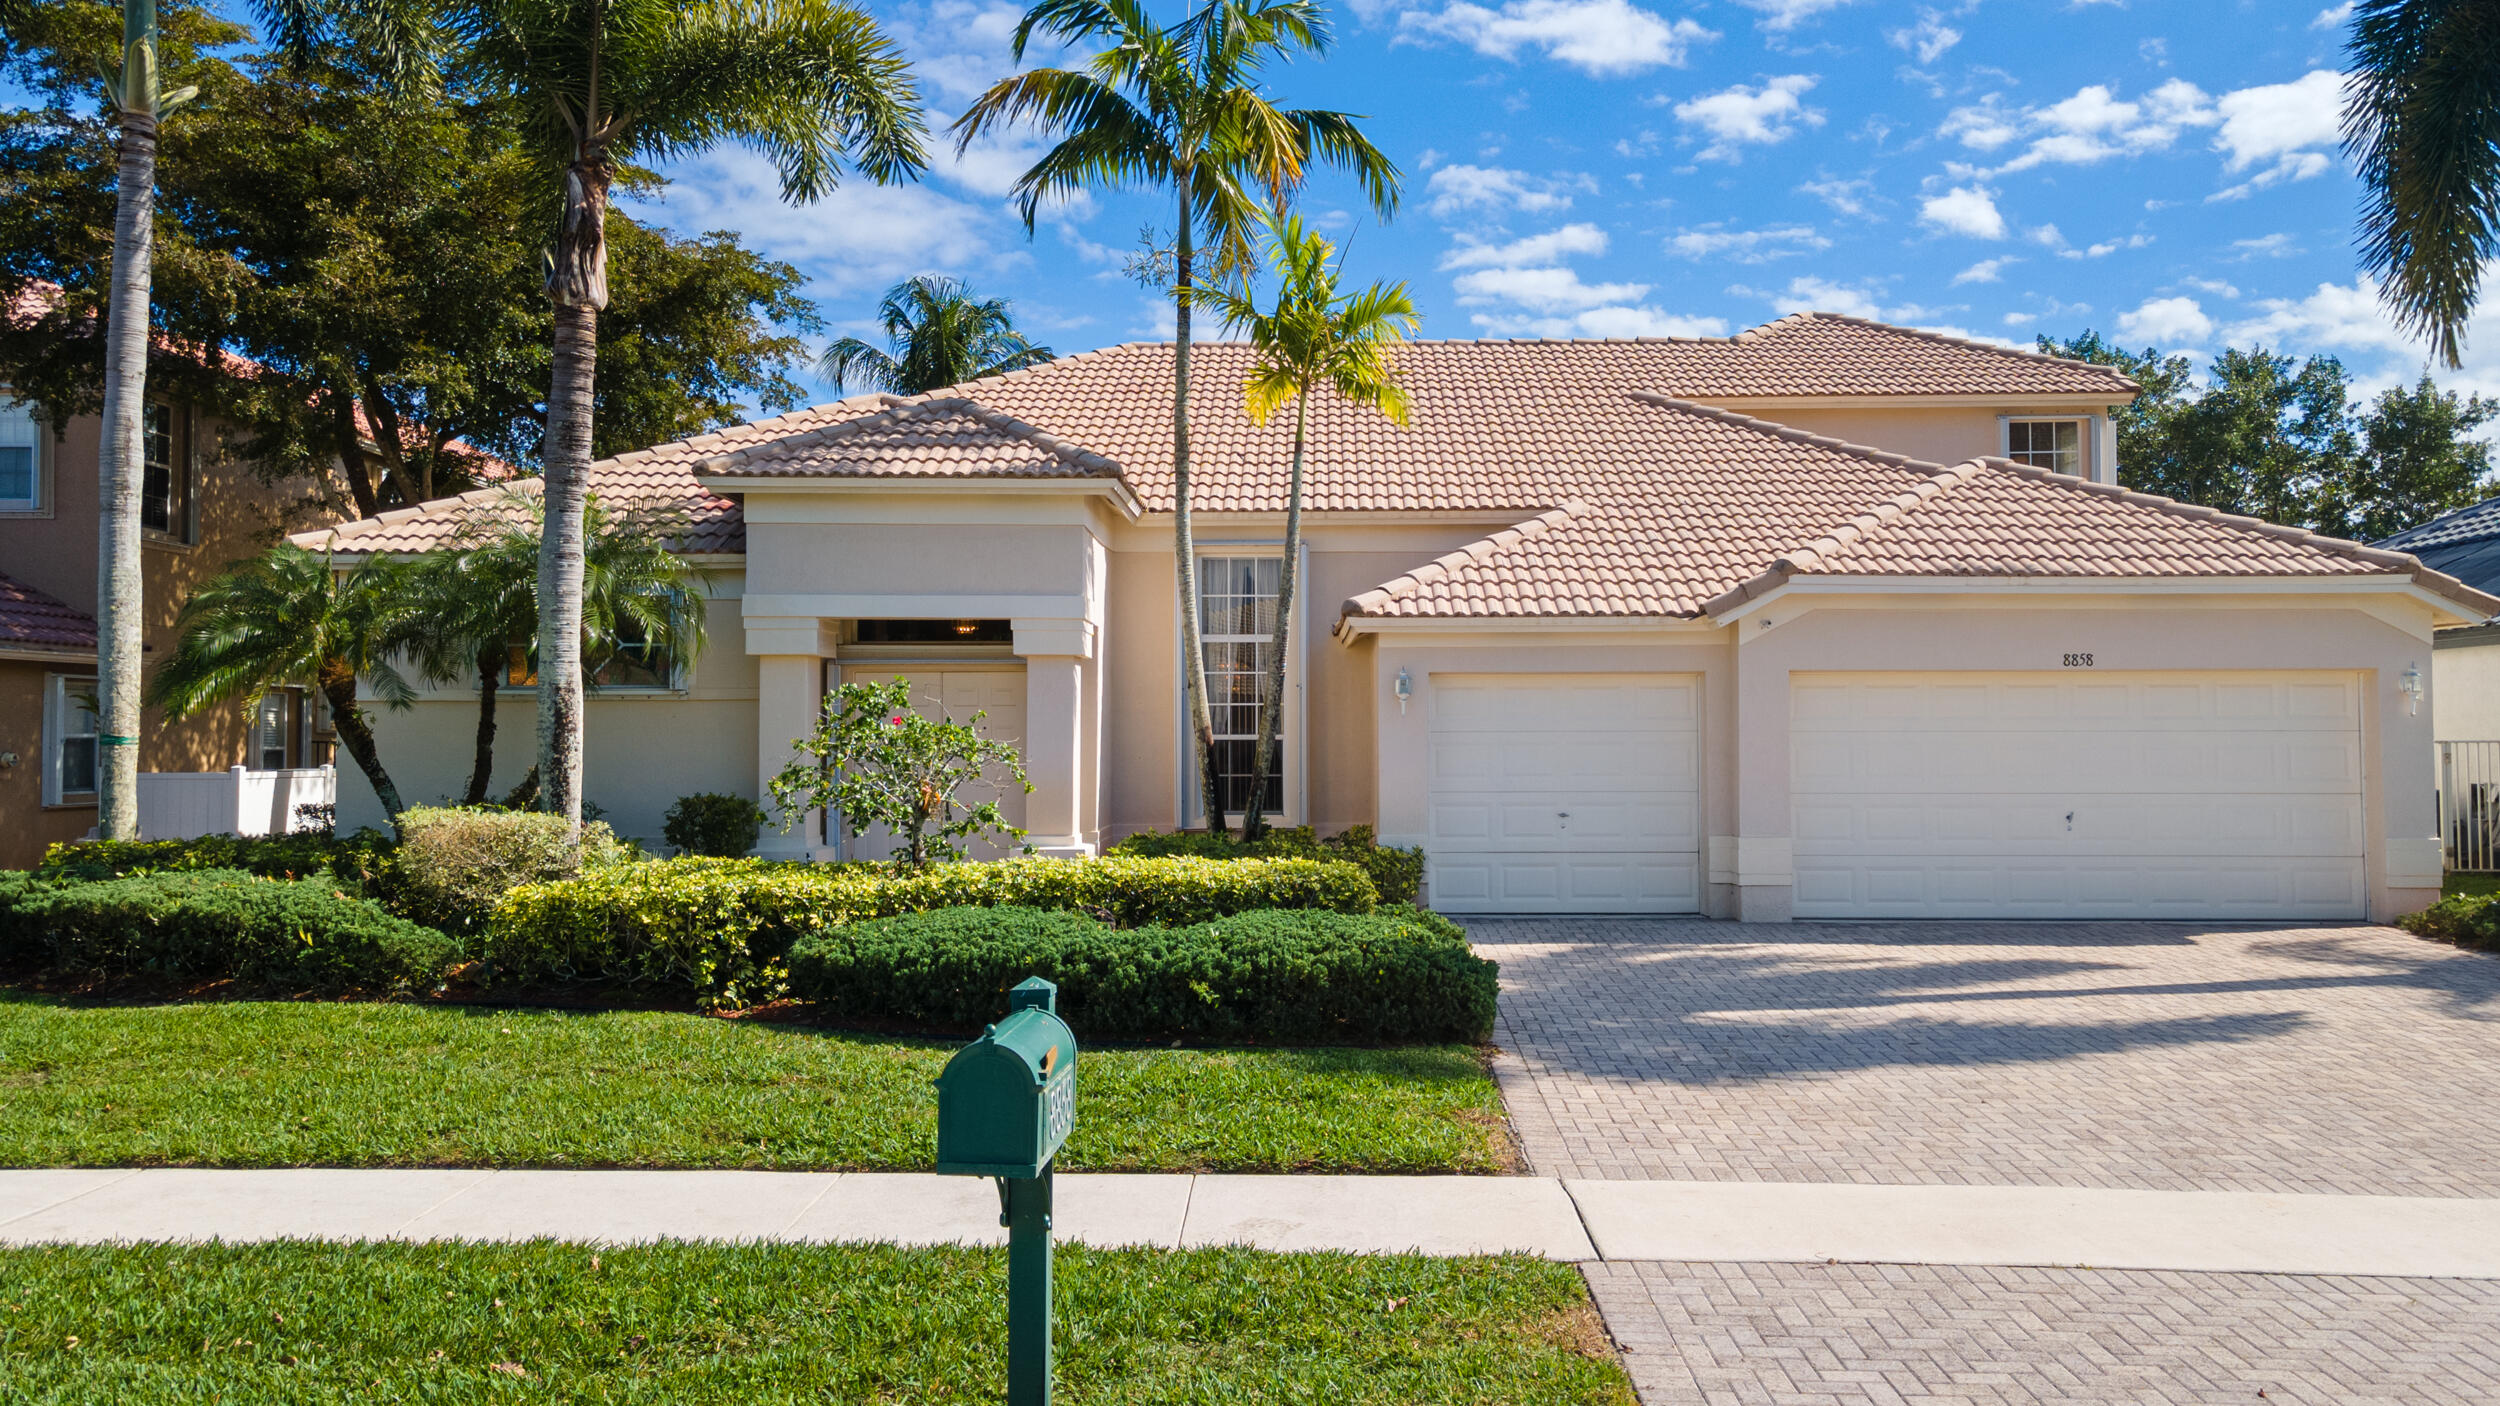 Property for Sale at 8858 Georgetown Lane, Boynton Beach, Palm Beach County, Florida - Bedrooms: 5 
Bathrooms: 4  - $825,000